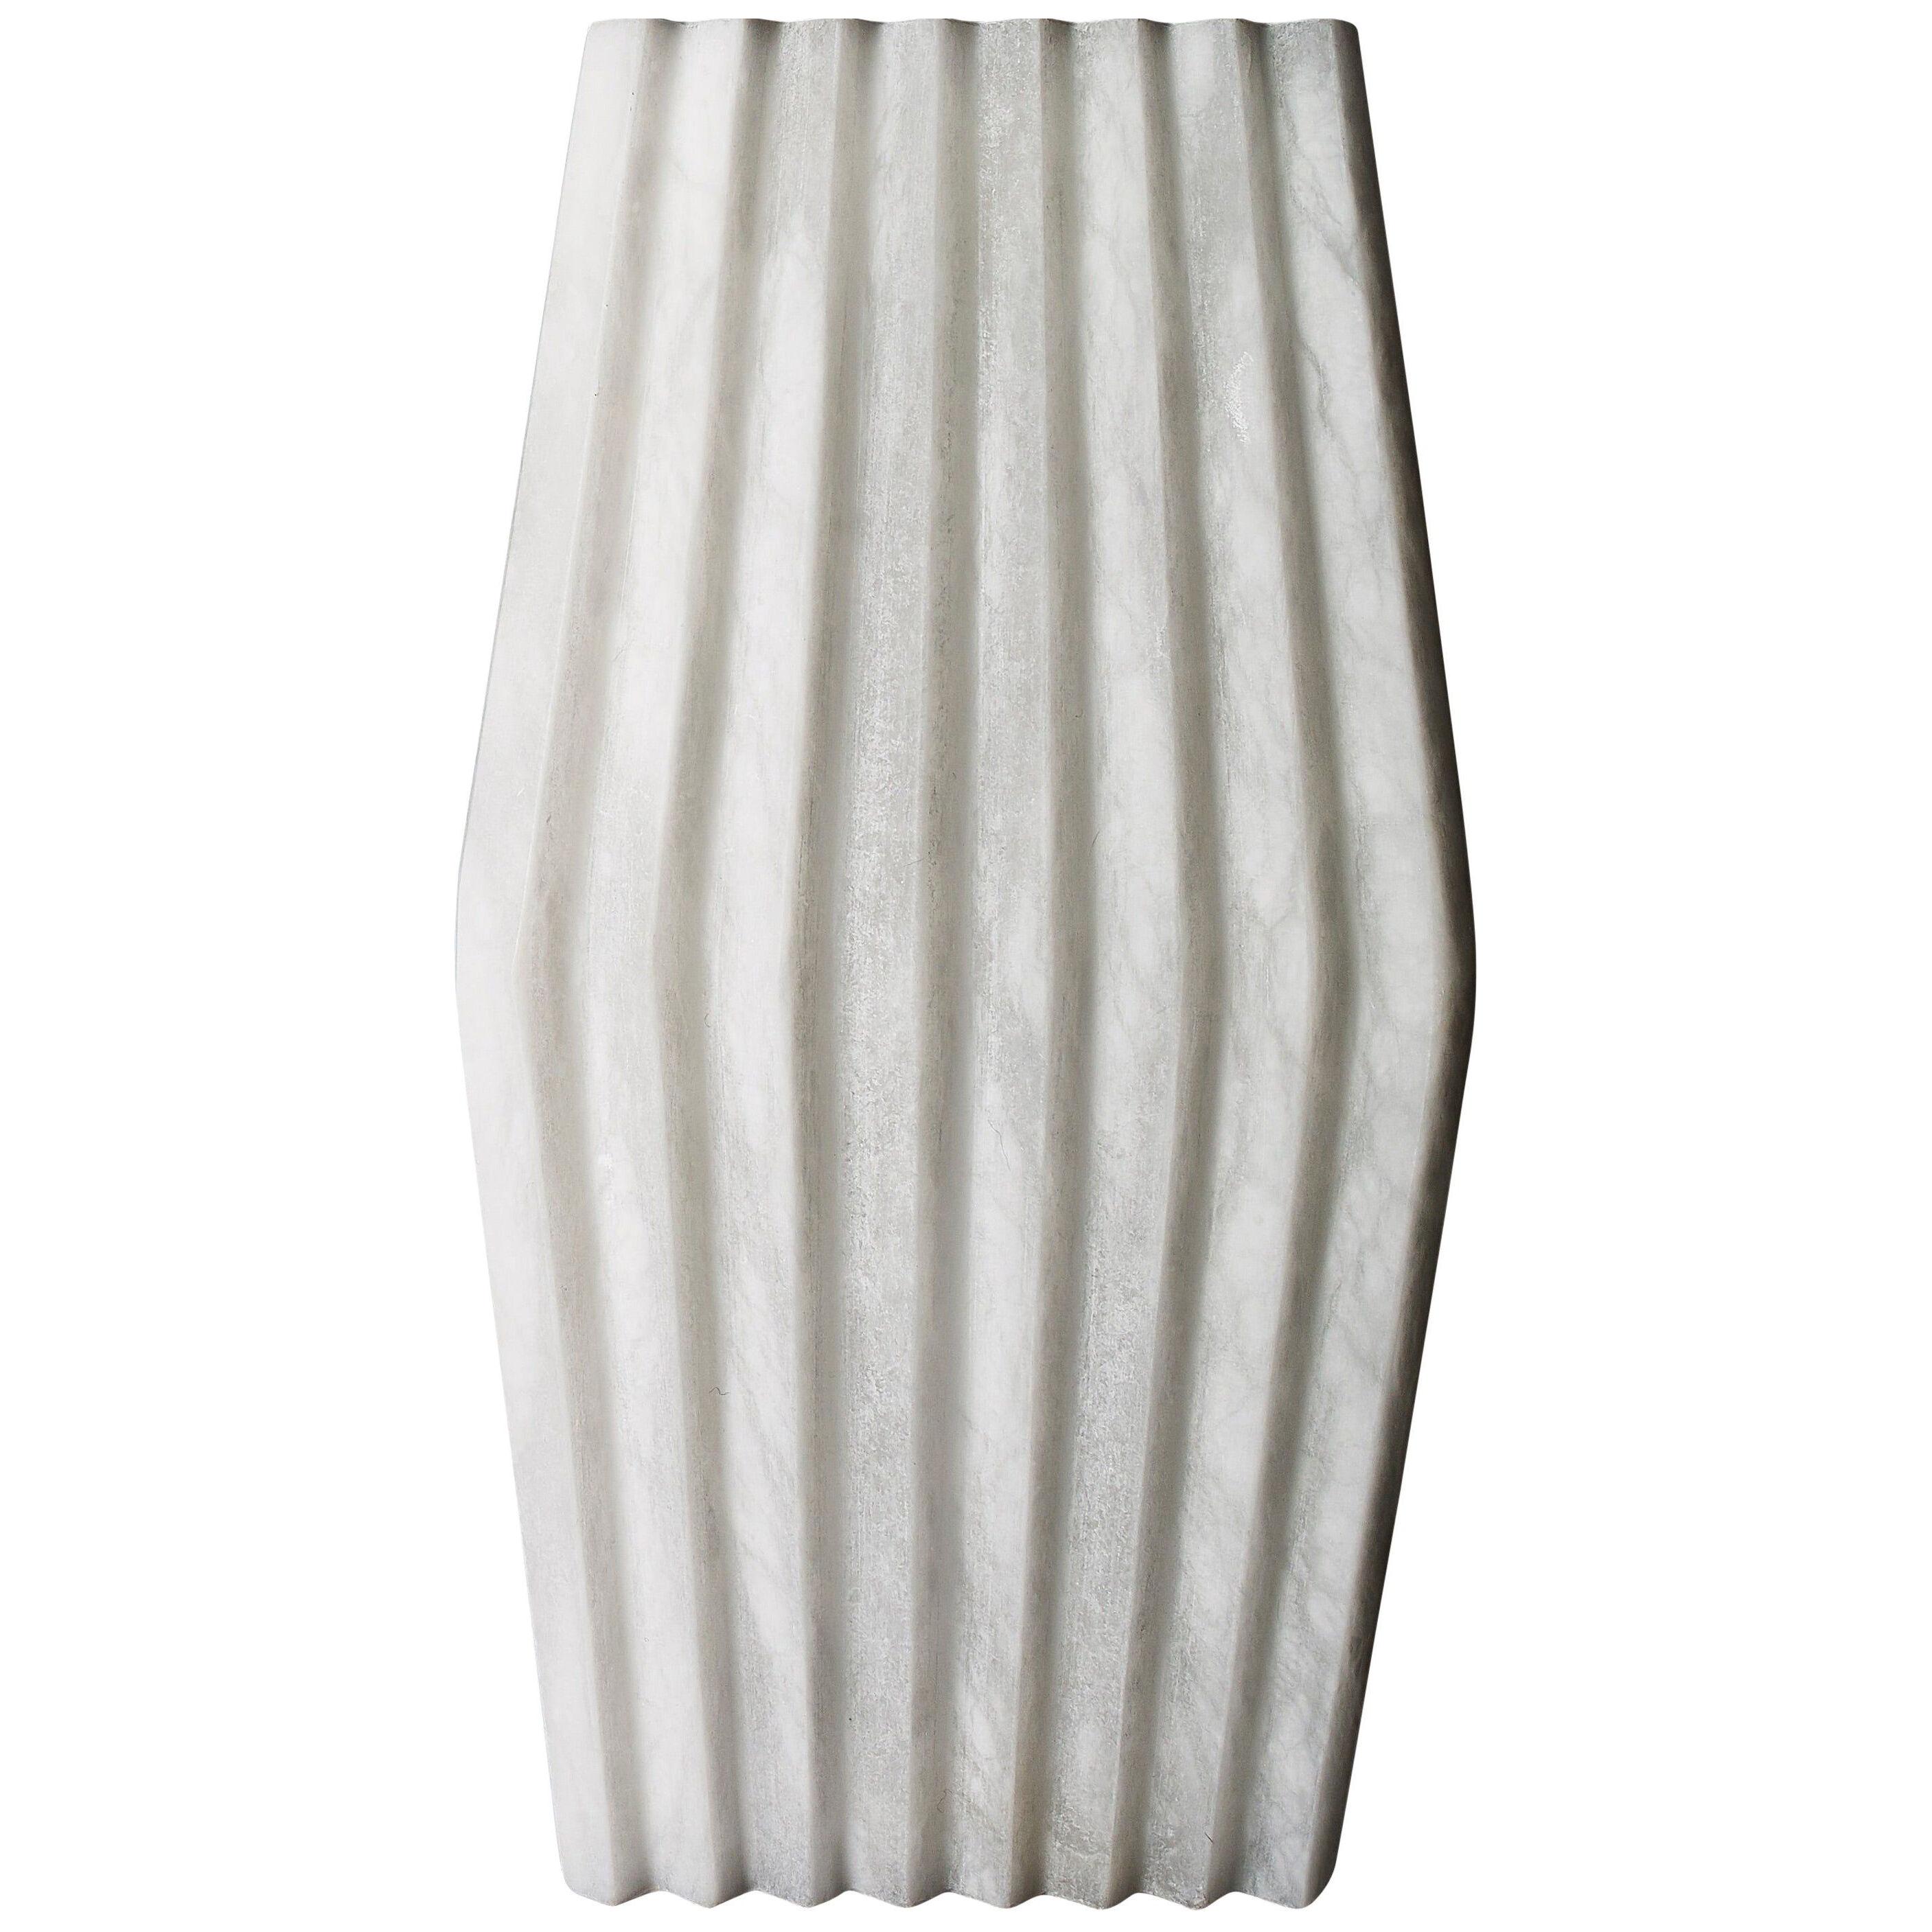 Bespoke Minimalist Italian Neoclassical White Alabaster Geometric Modern Sconce